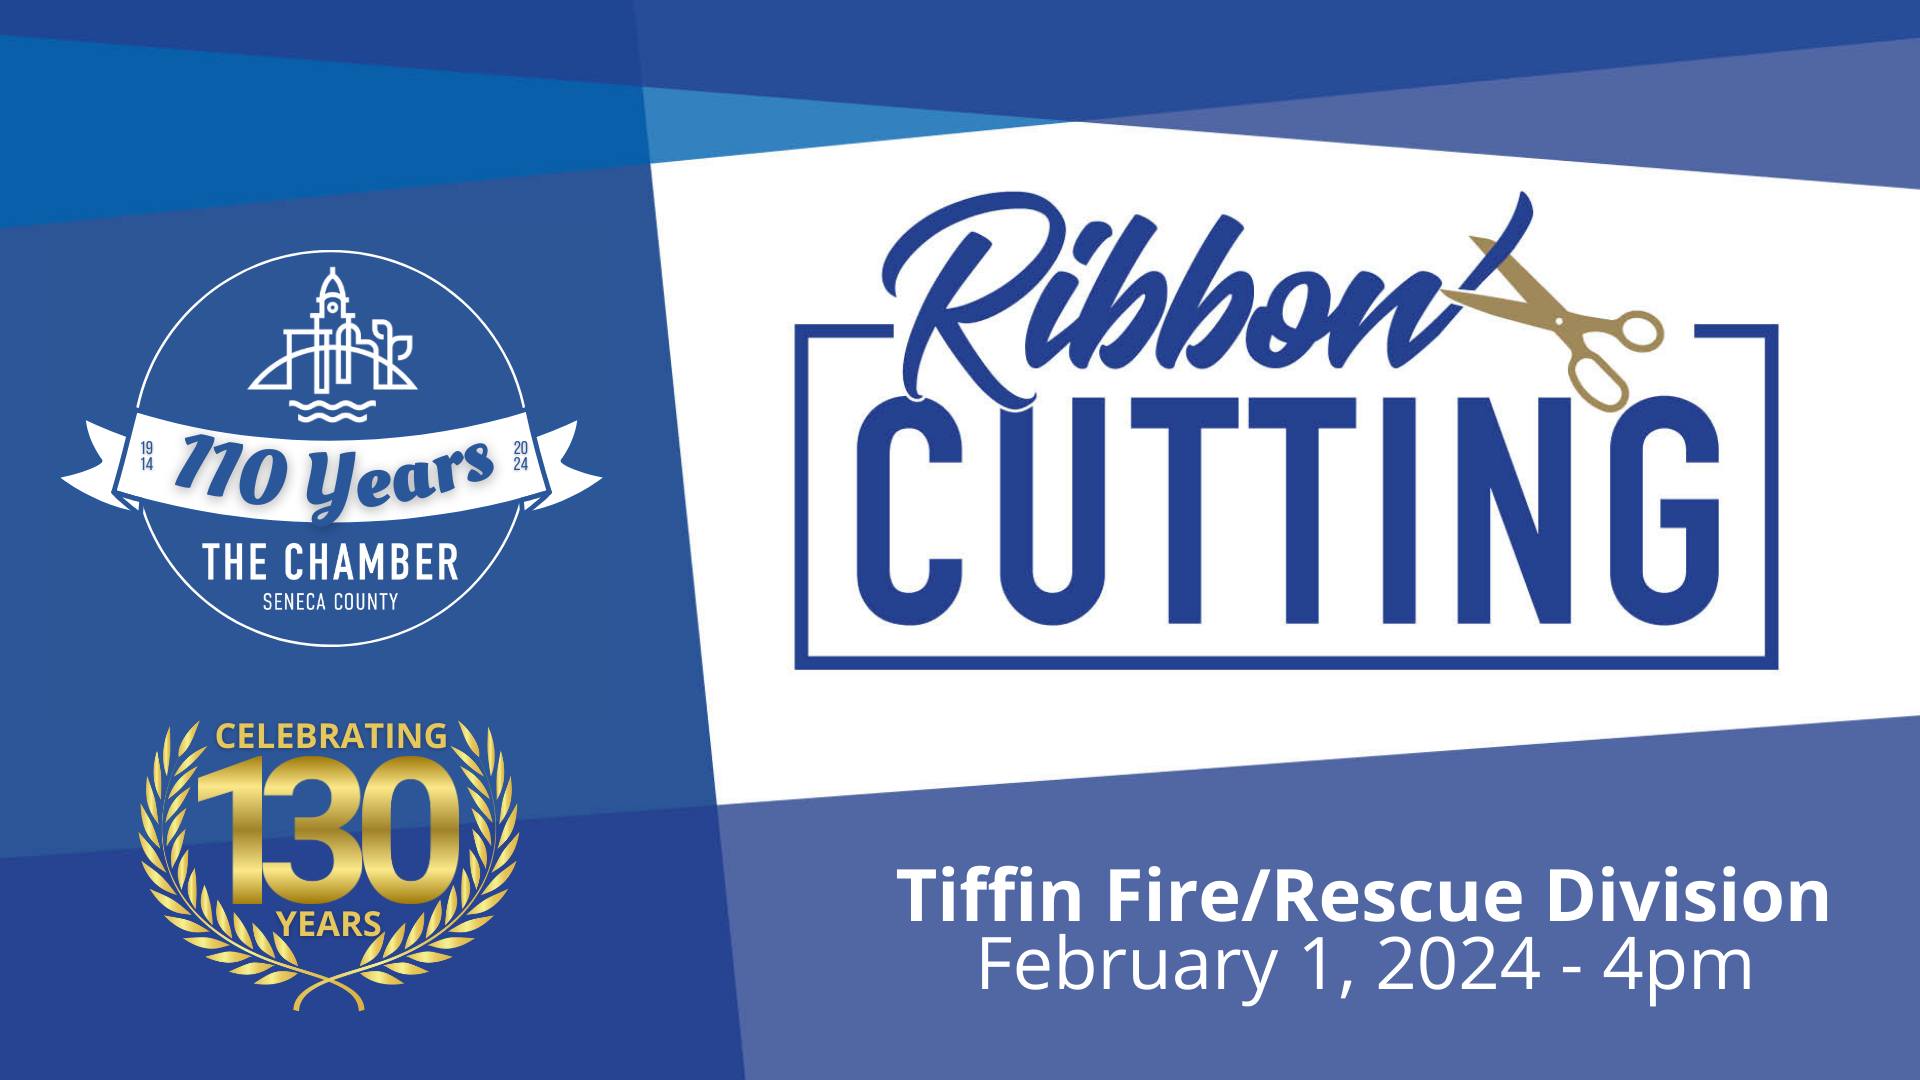 Ribbon Cutting | Tiffin Fire/Rescue Division's 130th Anniversary